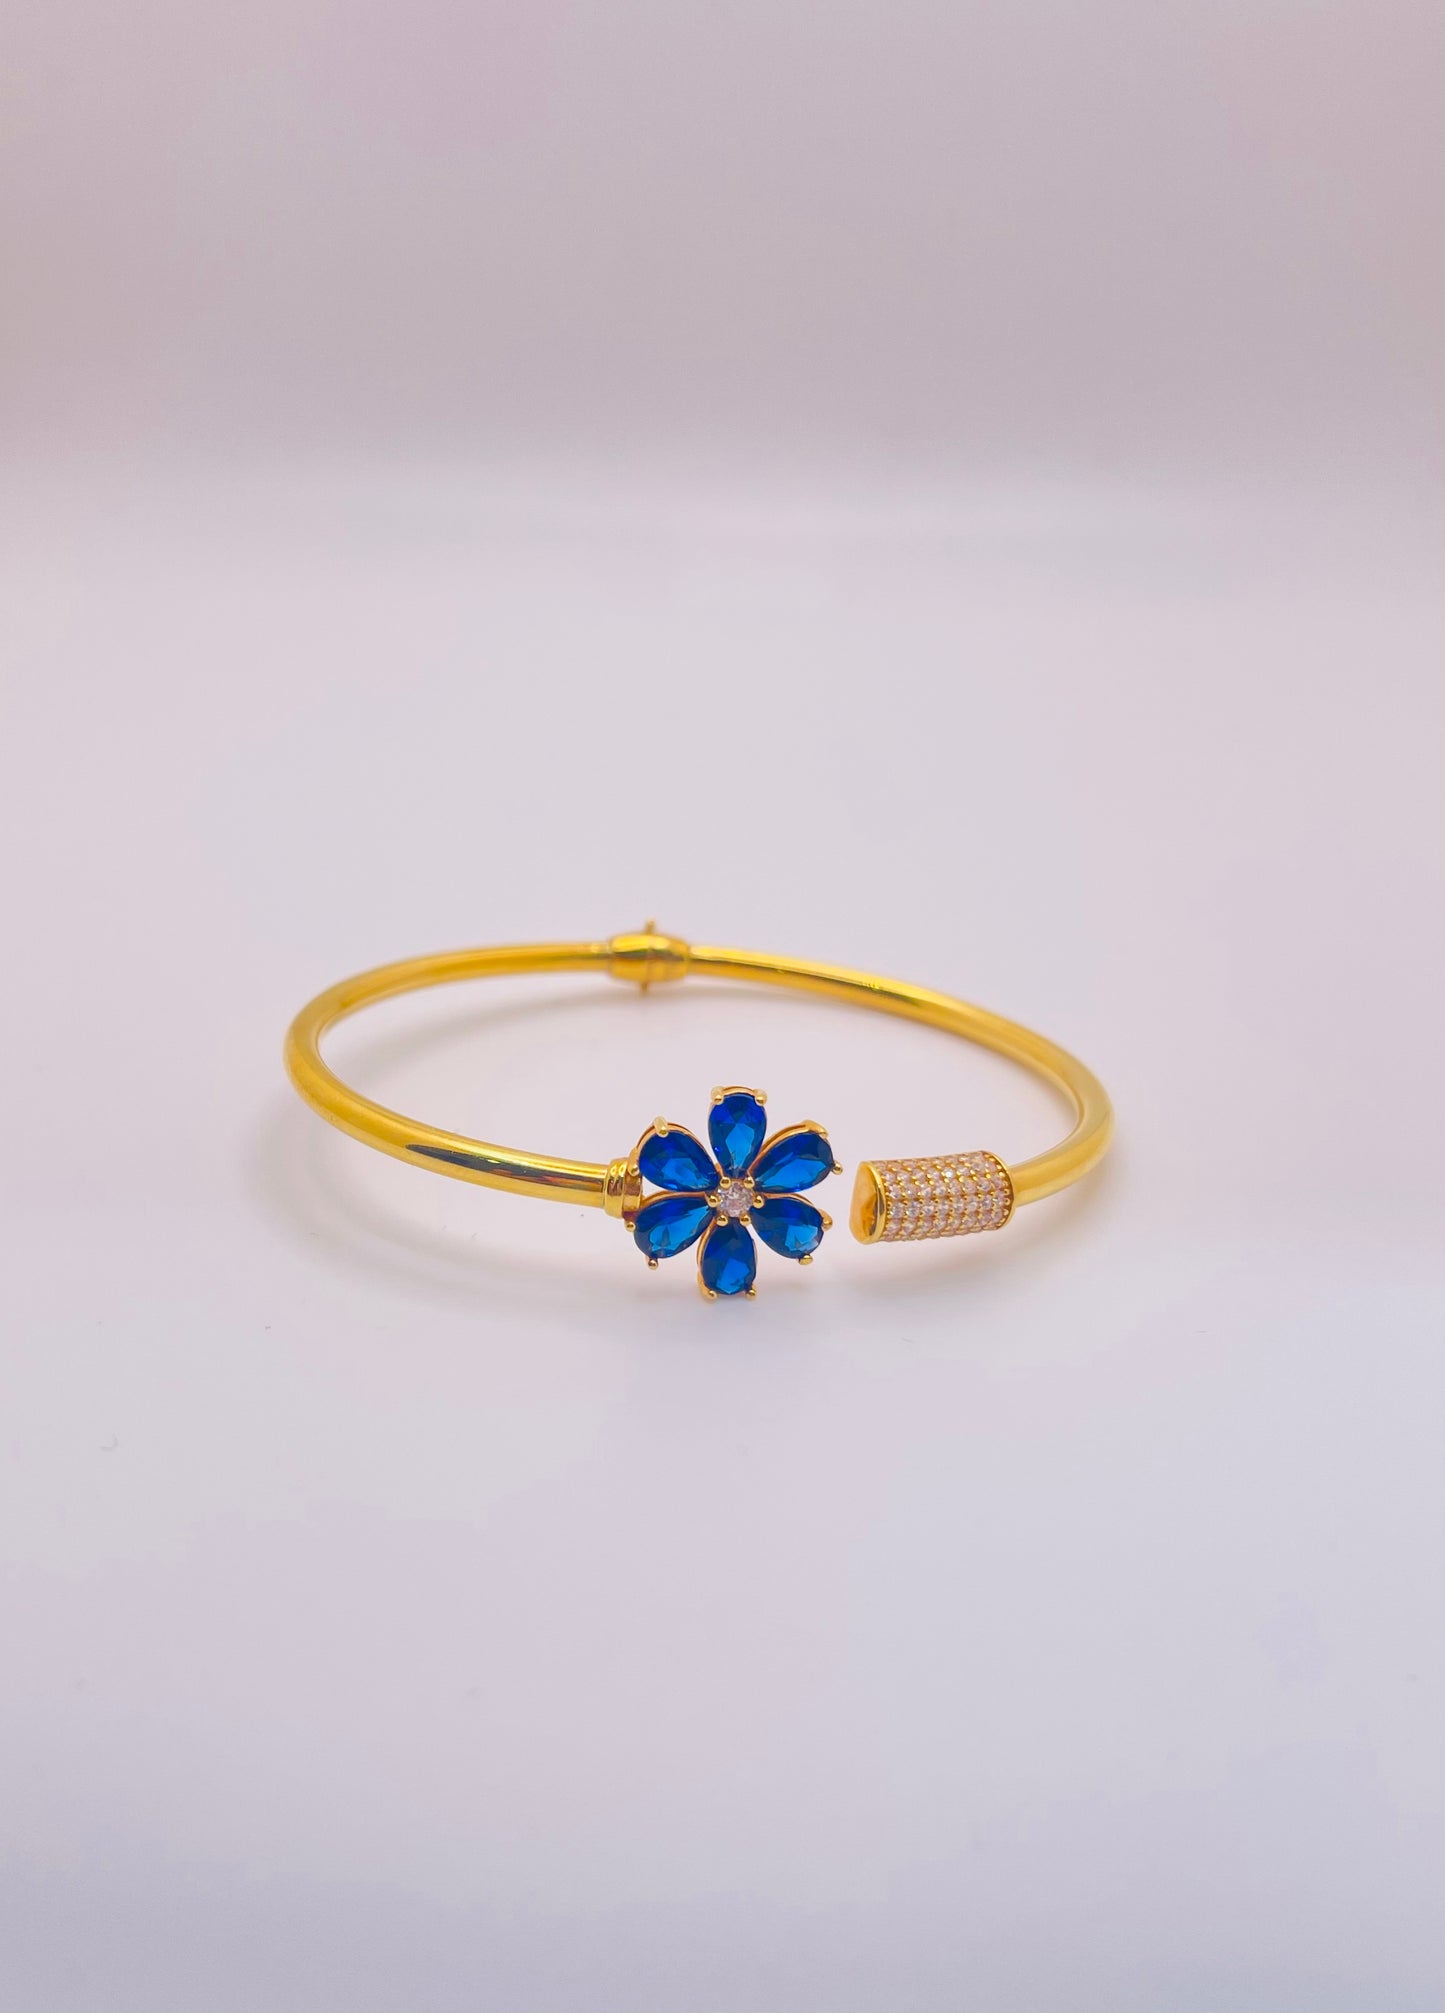 21k Gold Blue daisy crystals Bangle Bracelet